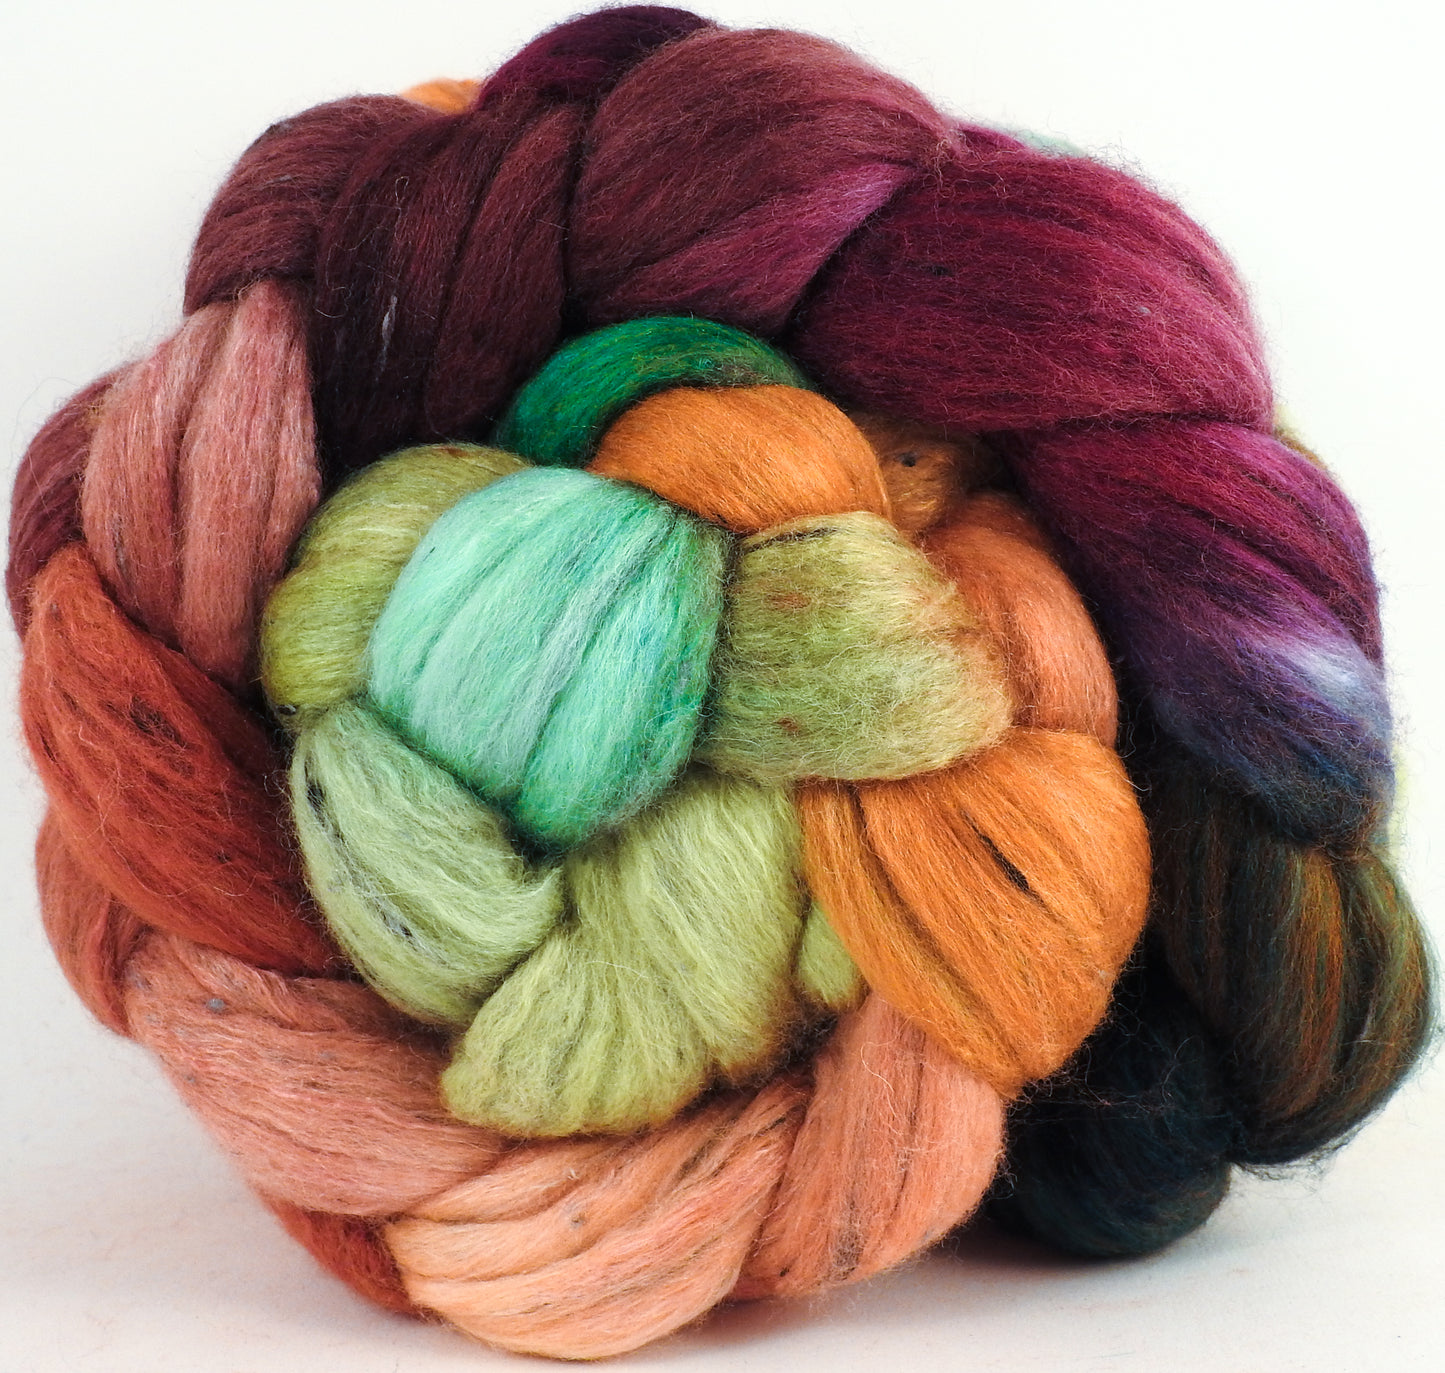 Batt in a Braid #49 - Icelandic Poppies (5.6 oz) - Polwarth/ Mulberry Silk/ Tweed Blend (50/25/25)